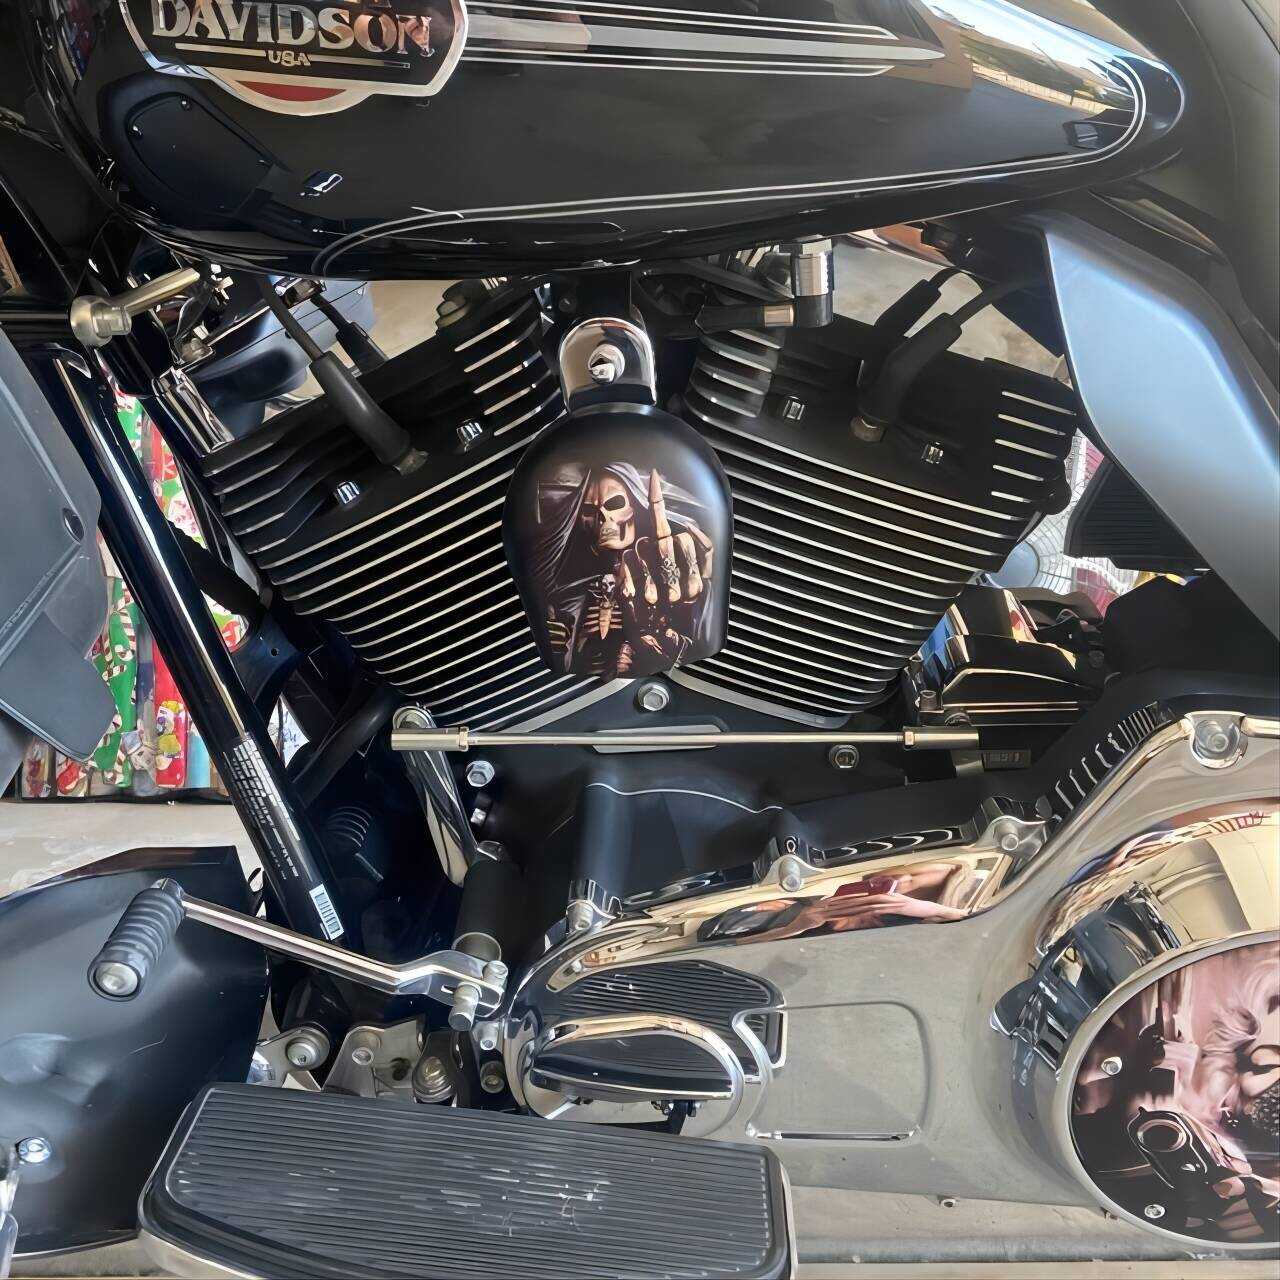 Harley Davidson Skull COWBELL HORN COVER